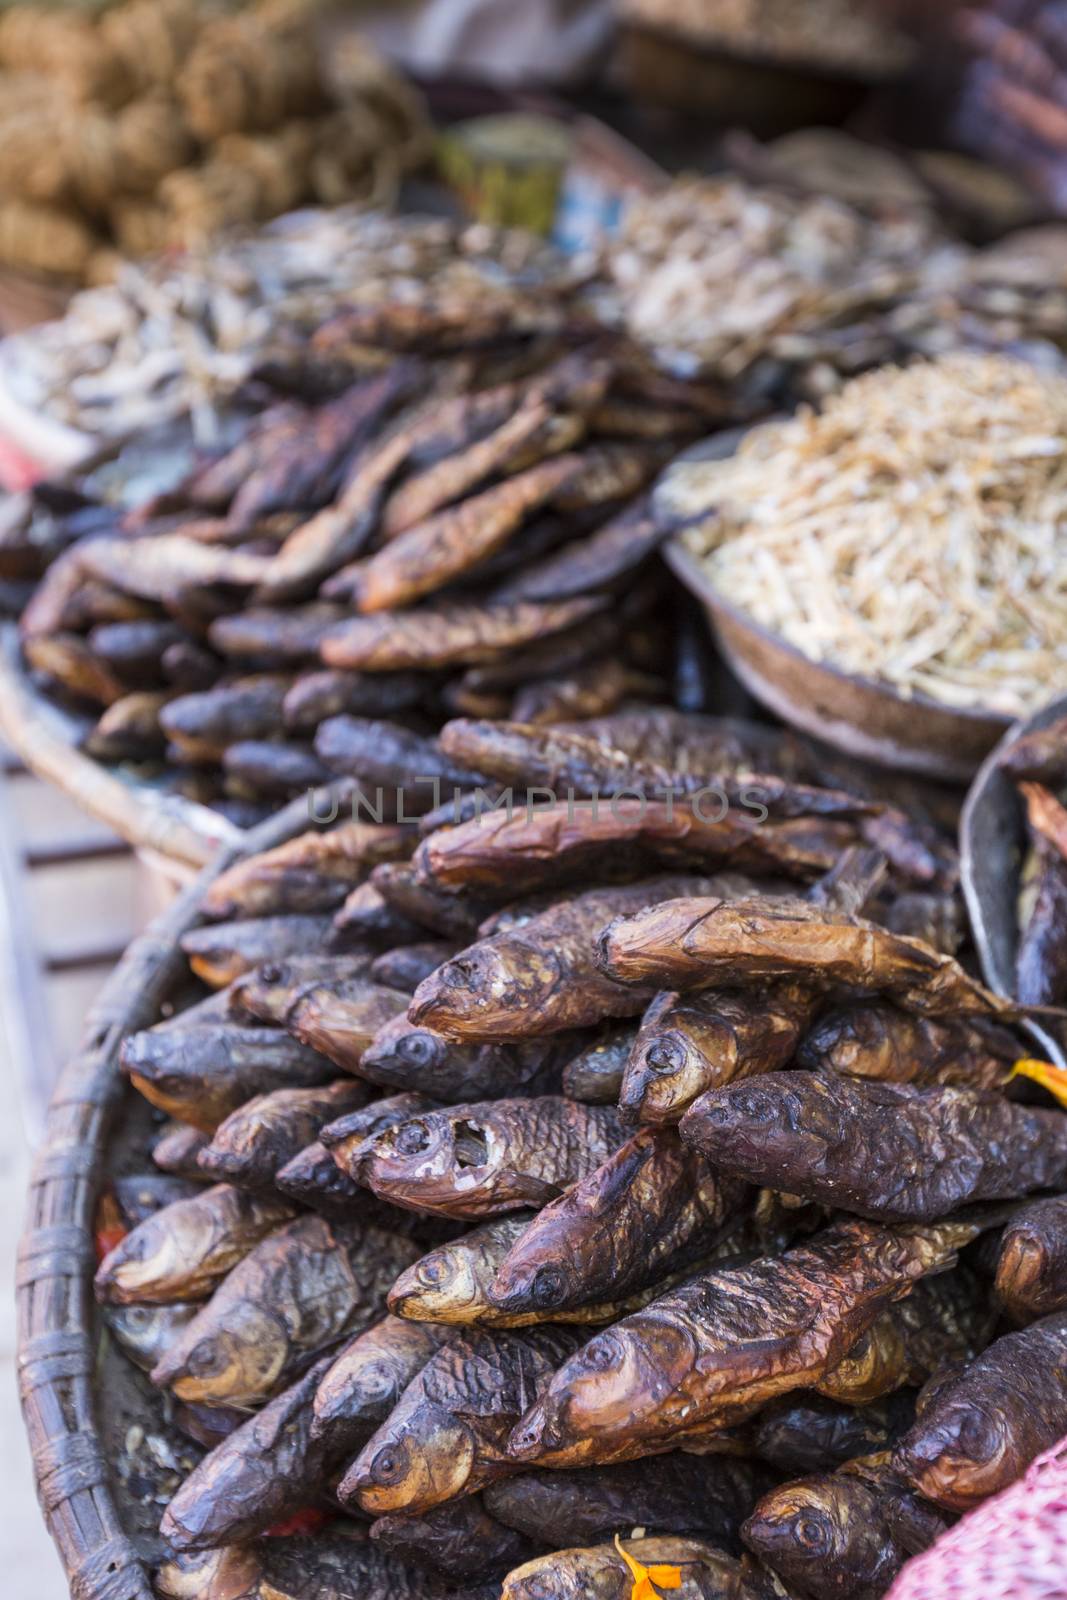 Smoked and dried fish in street of Kathmandu, Nepal

